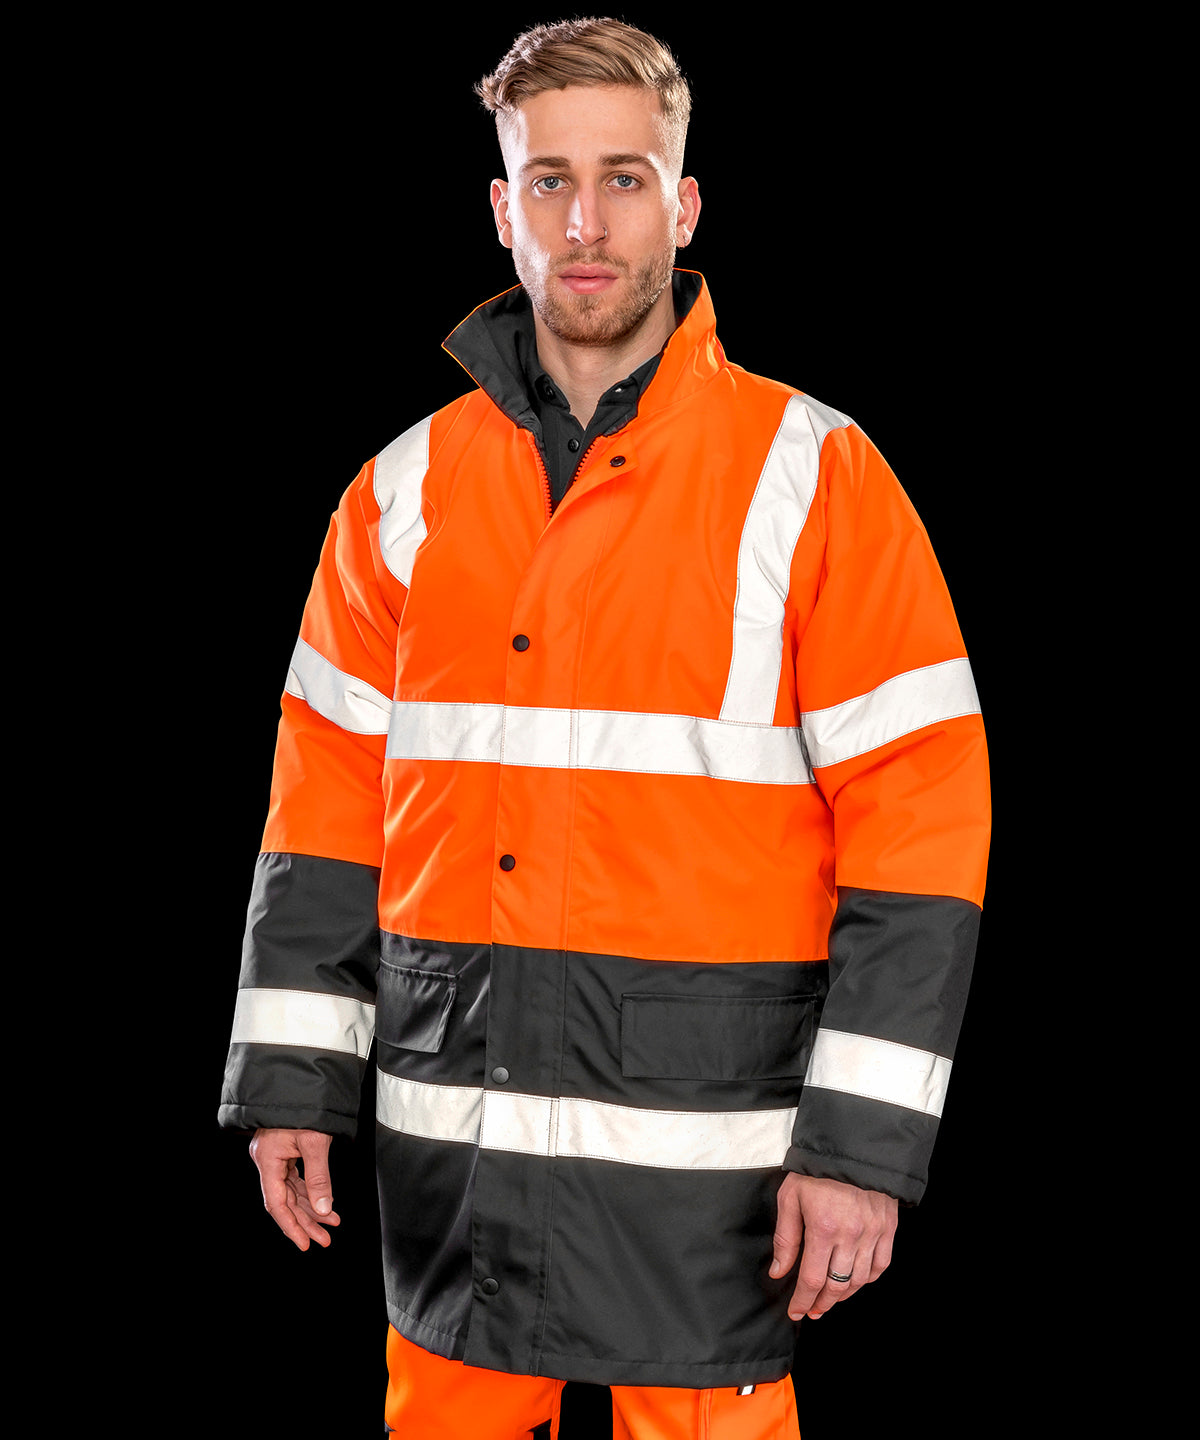 Jakkar - Motorway Two-tone Safety Coat